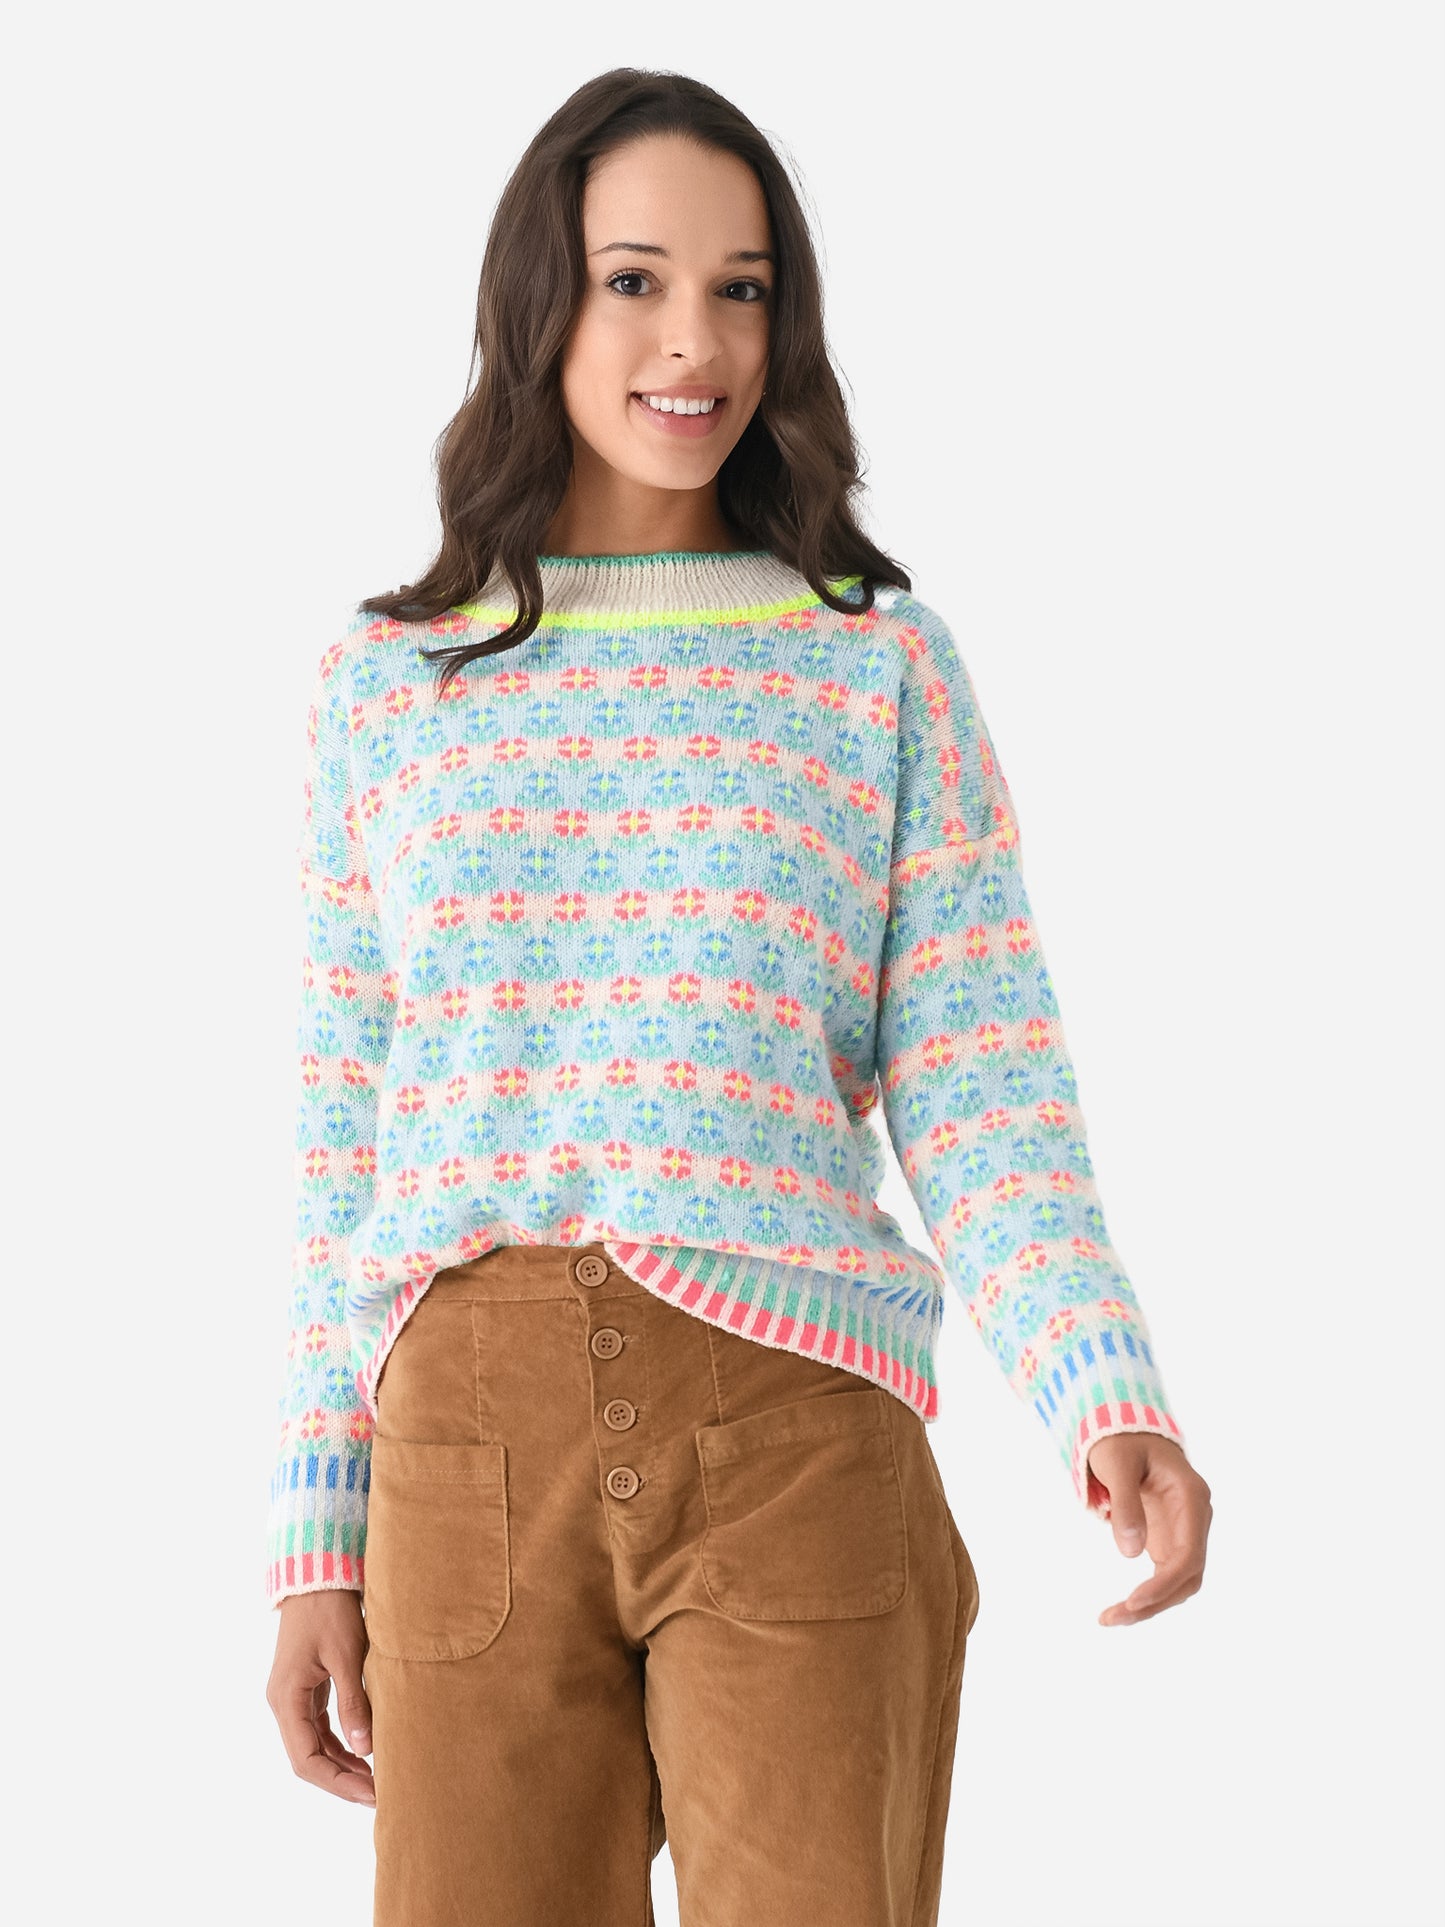 Dr Bloom Women's Tutu Sweater